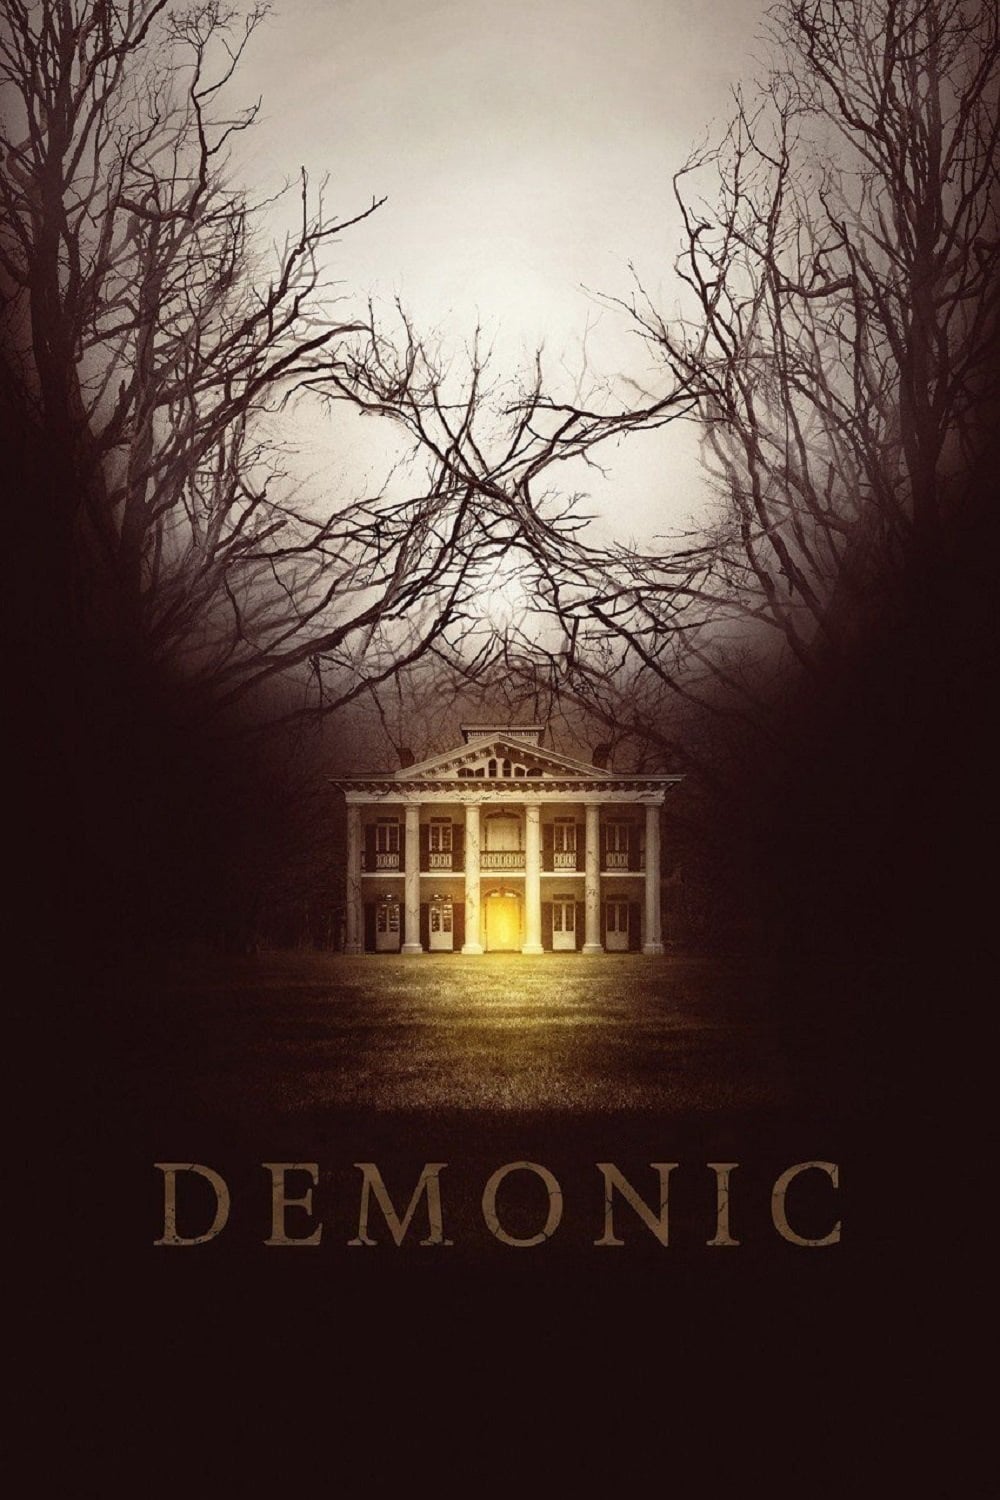 Banner Phim Demonic (Demonic)